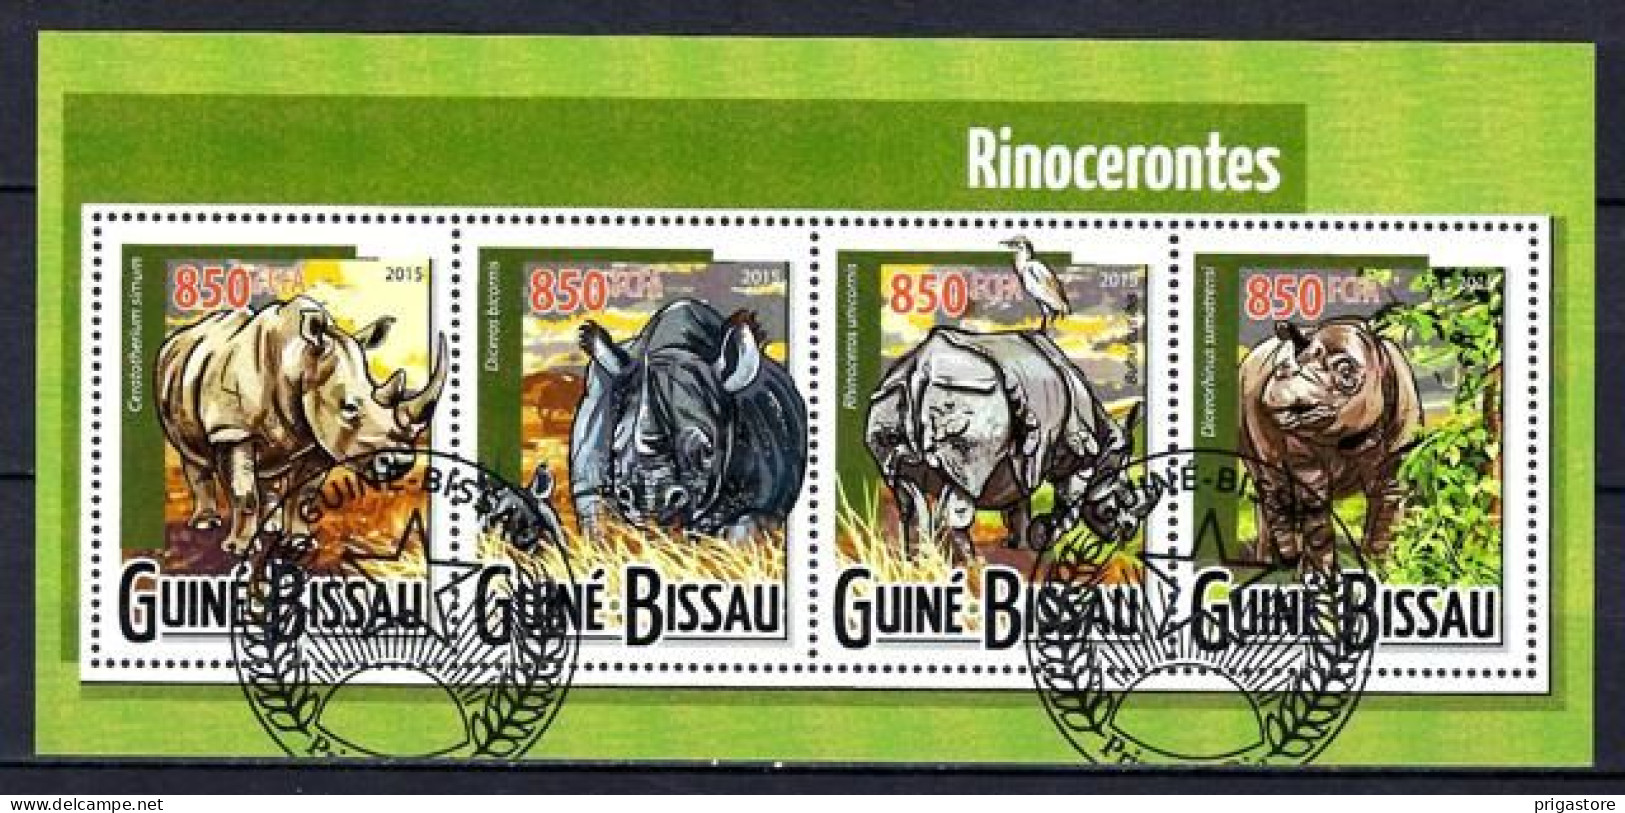 Animaux Rhinocéros Guinée Bissau 2015 (329) Yvert N° 6012 à 6015 Oblitérés Used - Neushoorn